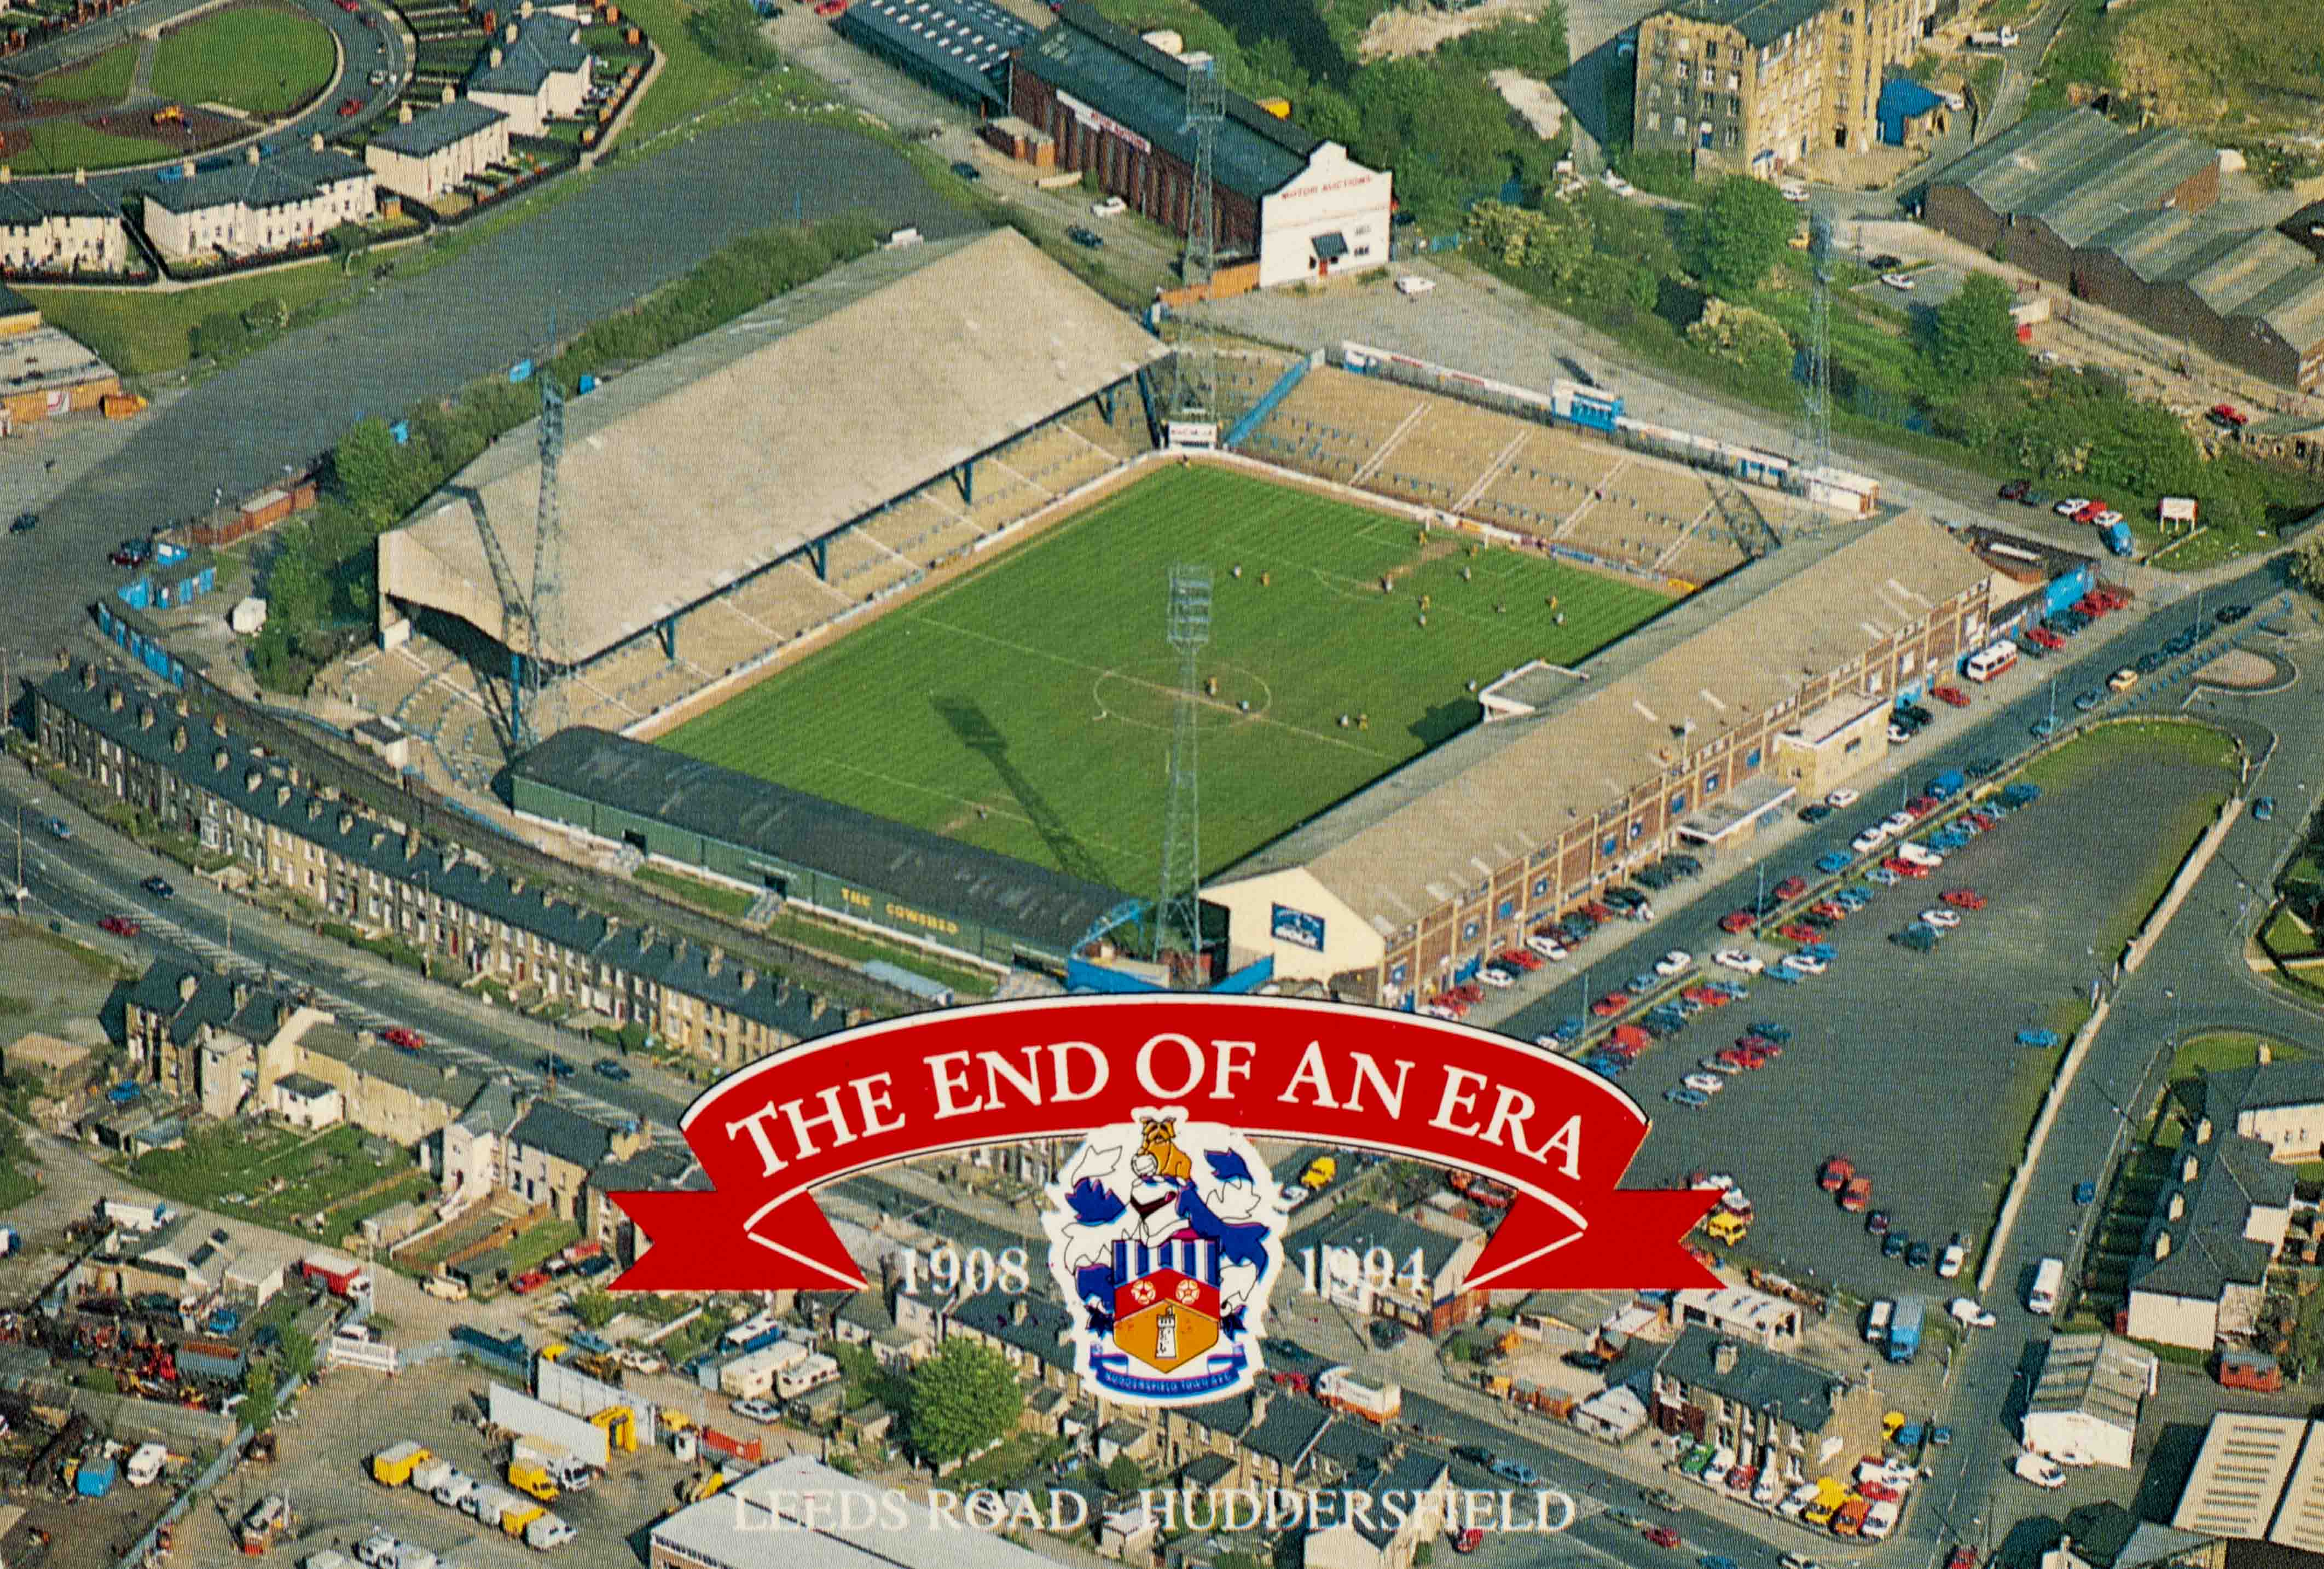 Pohlednice Stadion, The end of Era, Leads road Huddersfield